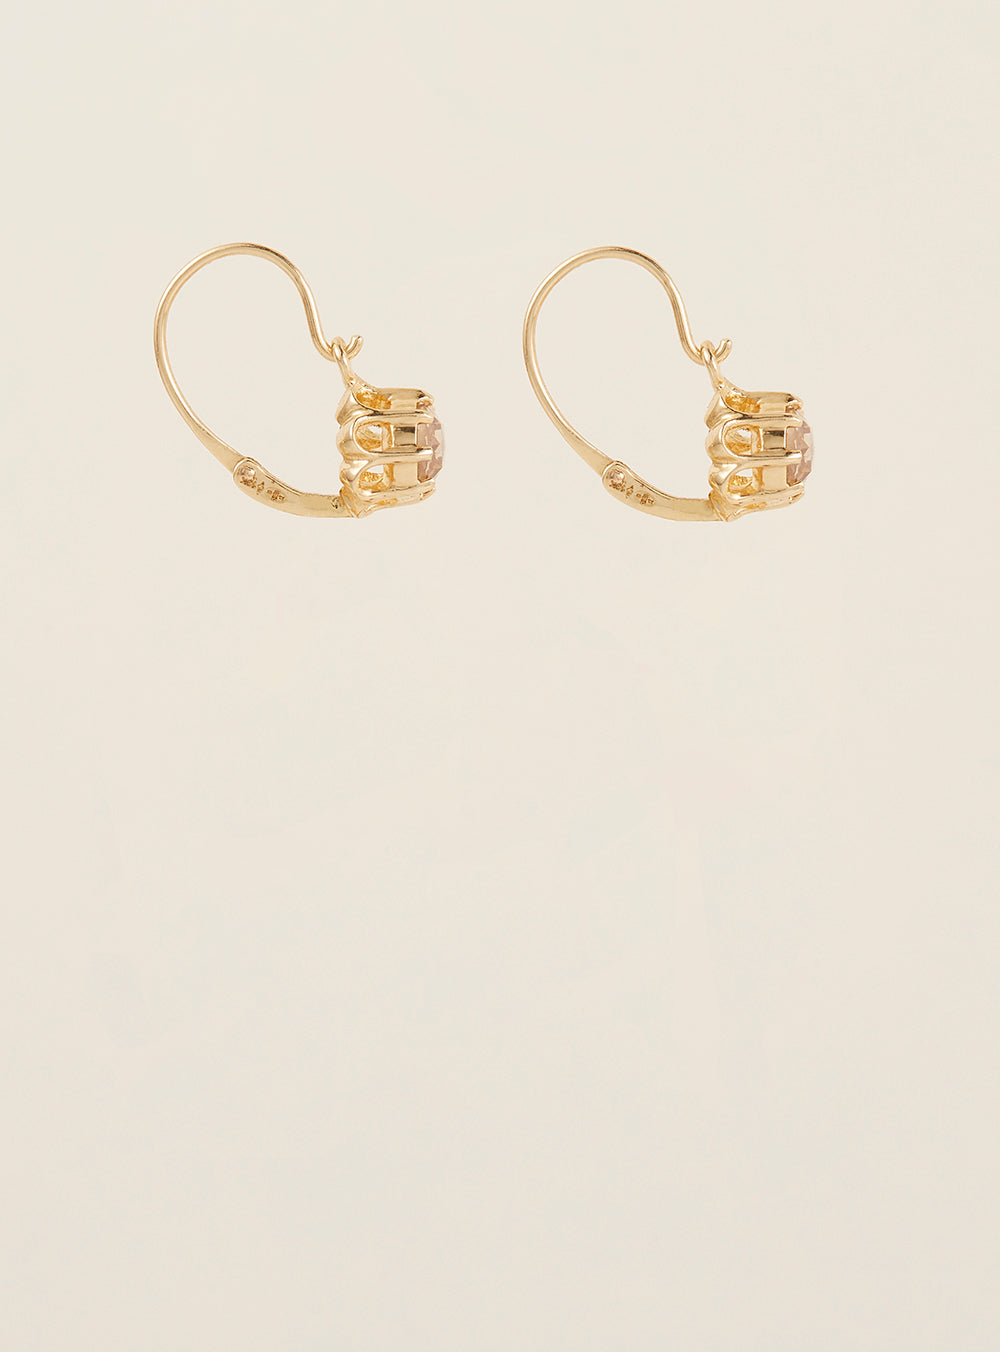 GOLD AND DIAMOND ARLESIAN EARRINGS